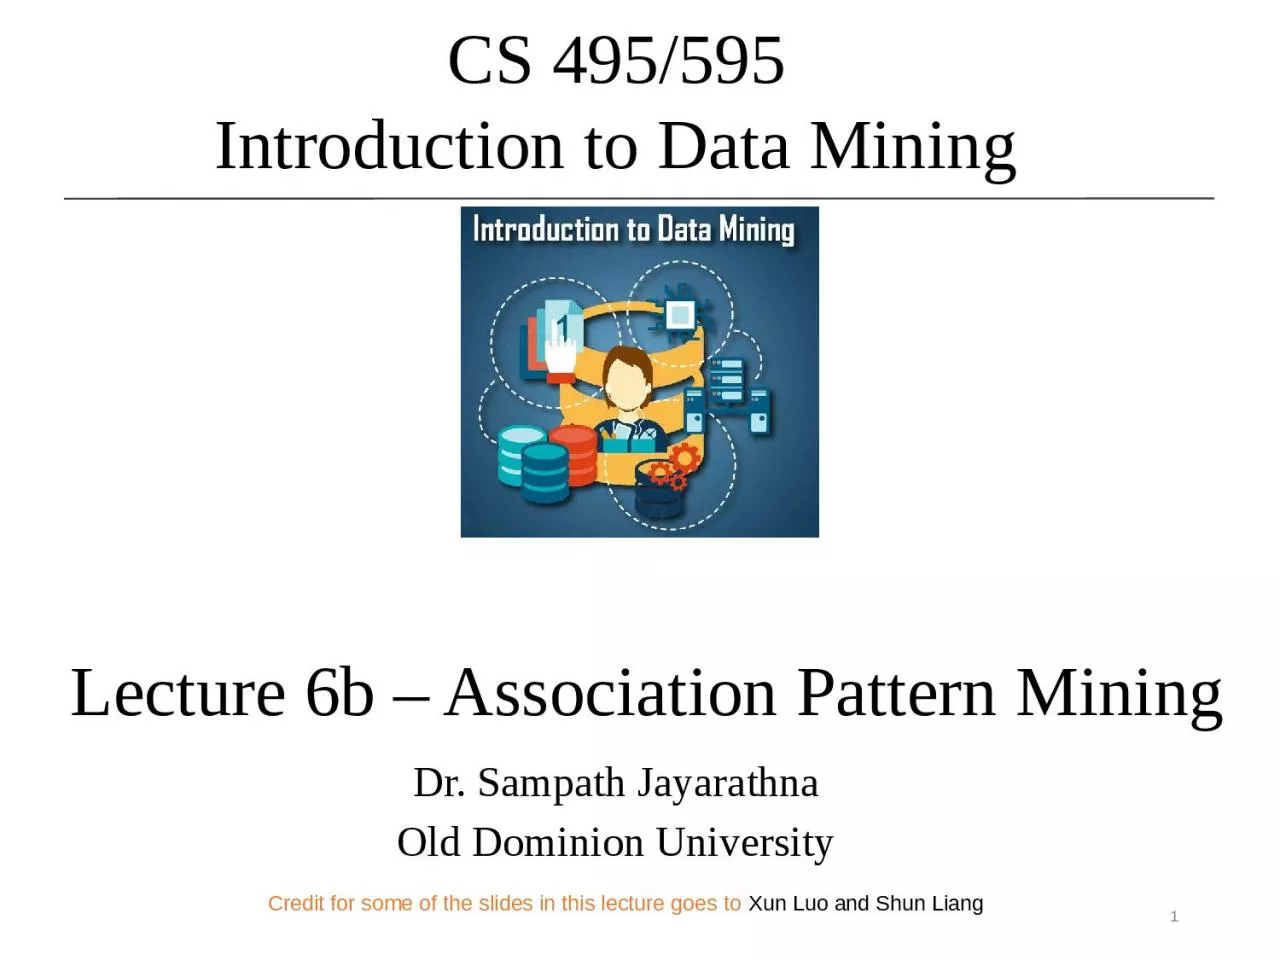 Lecture 6b – Association Pattern Mining